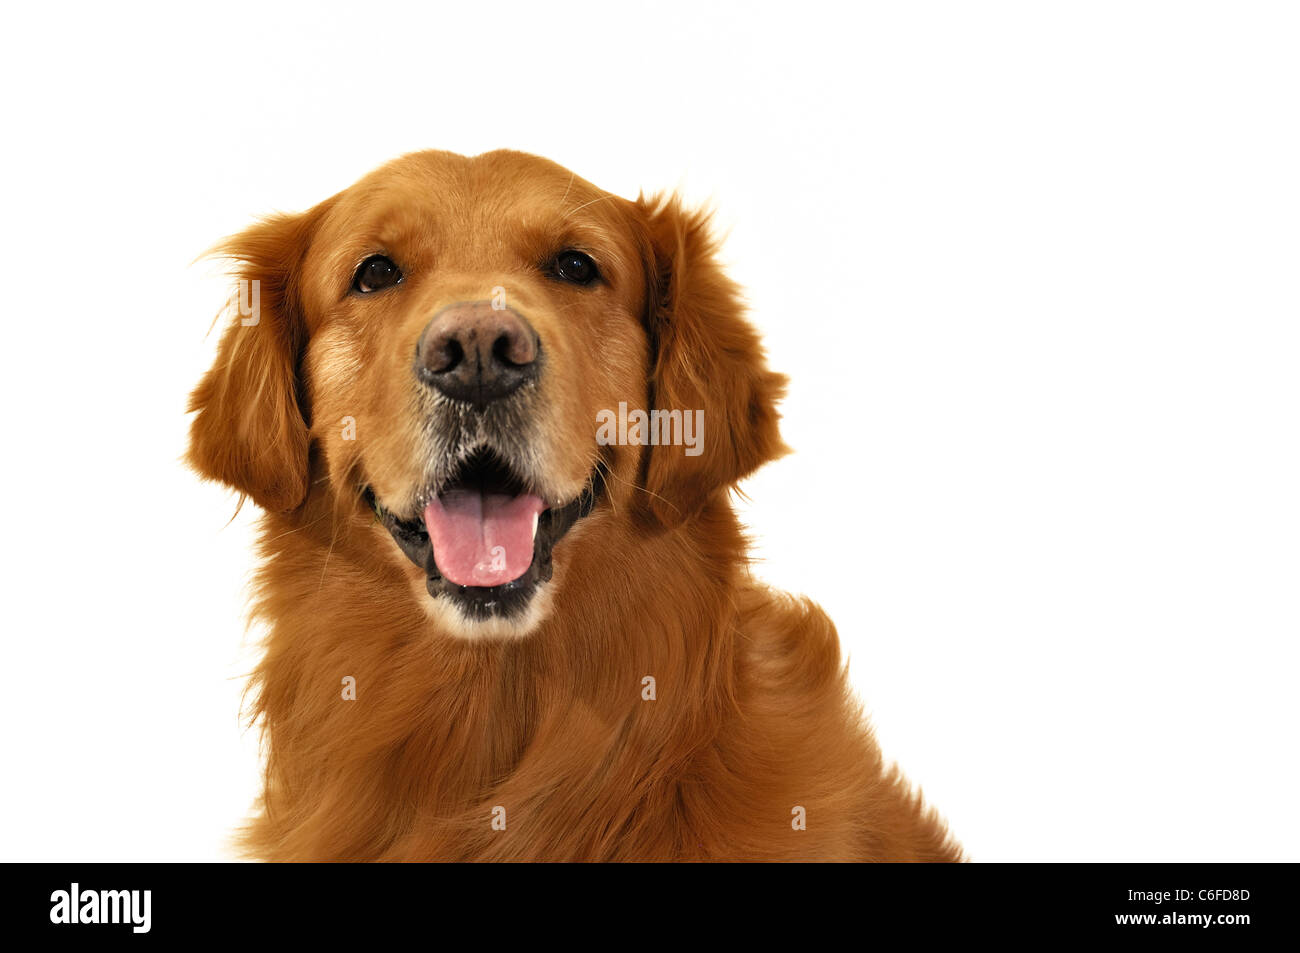 Golden retriever dog visage très expressif avant. Banque D'Images